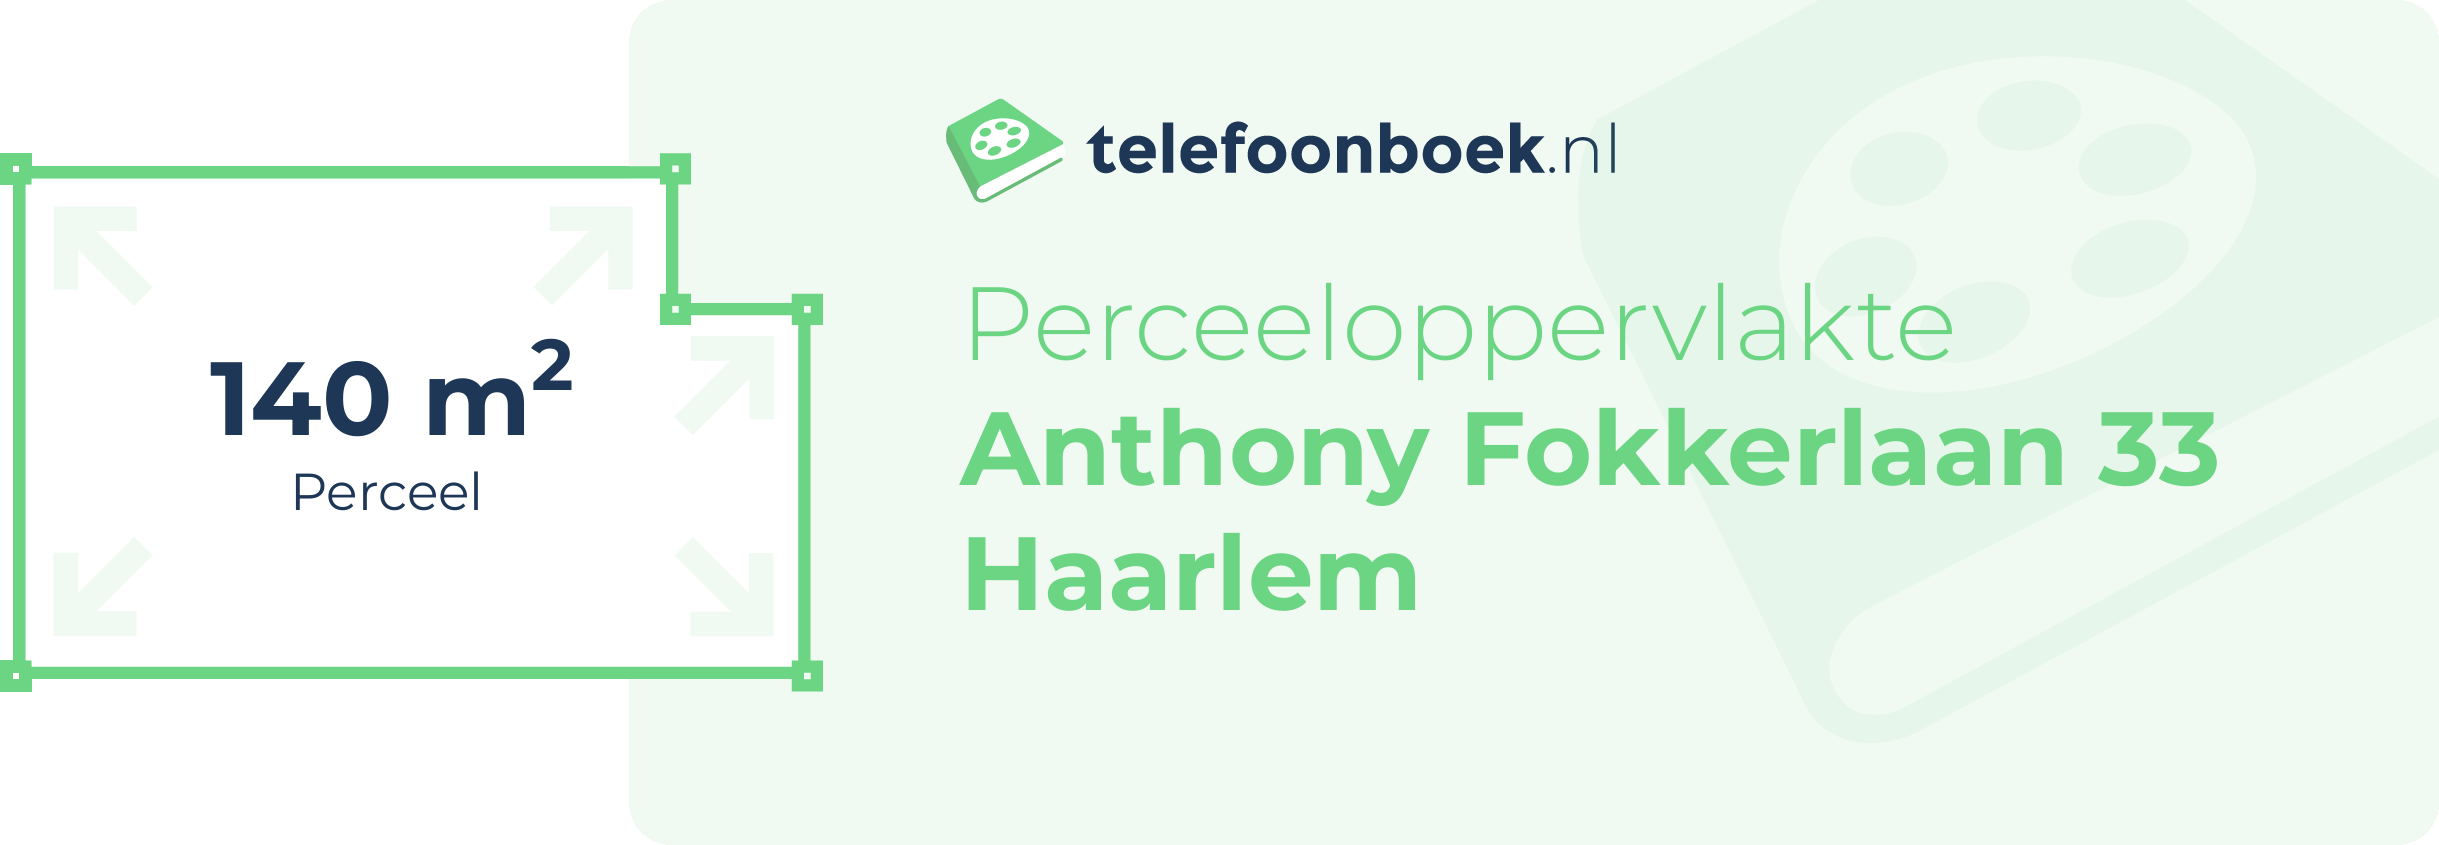 Perceeloppervlakte Anthony Fokkerlaan 33 Haarlem